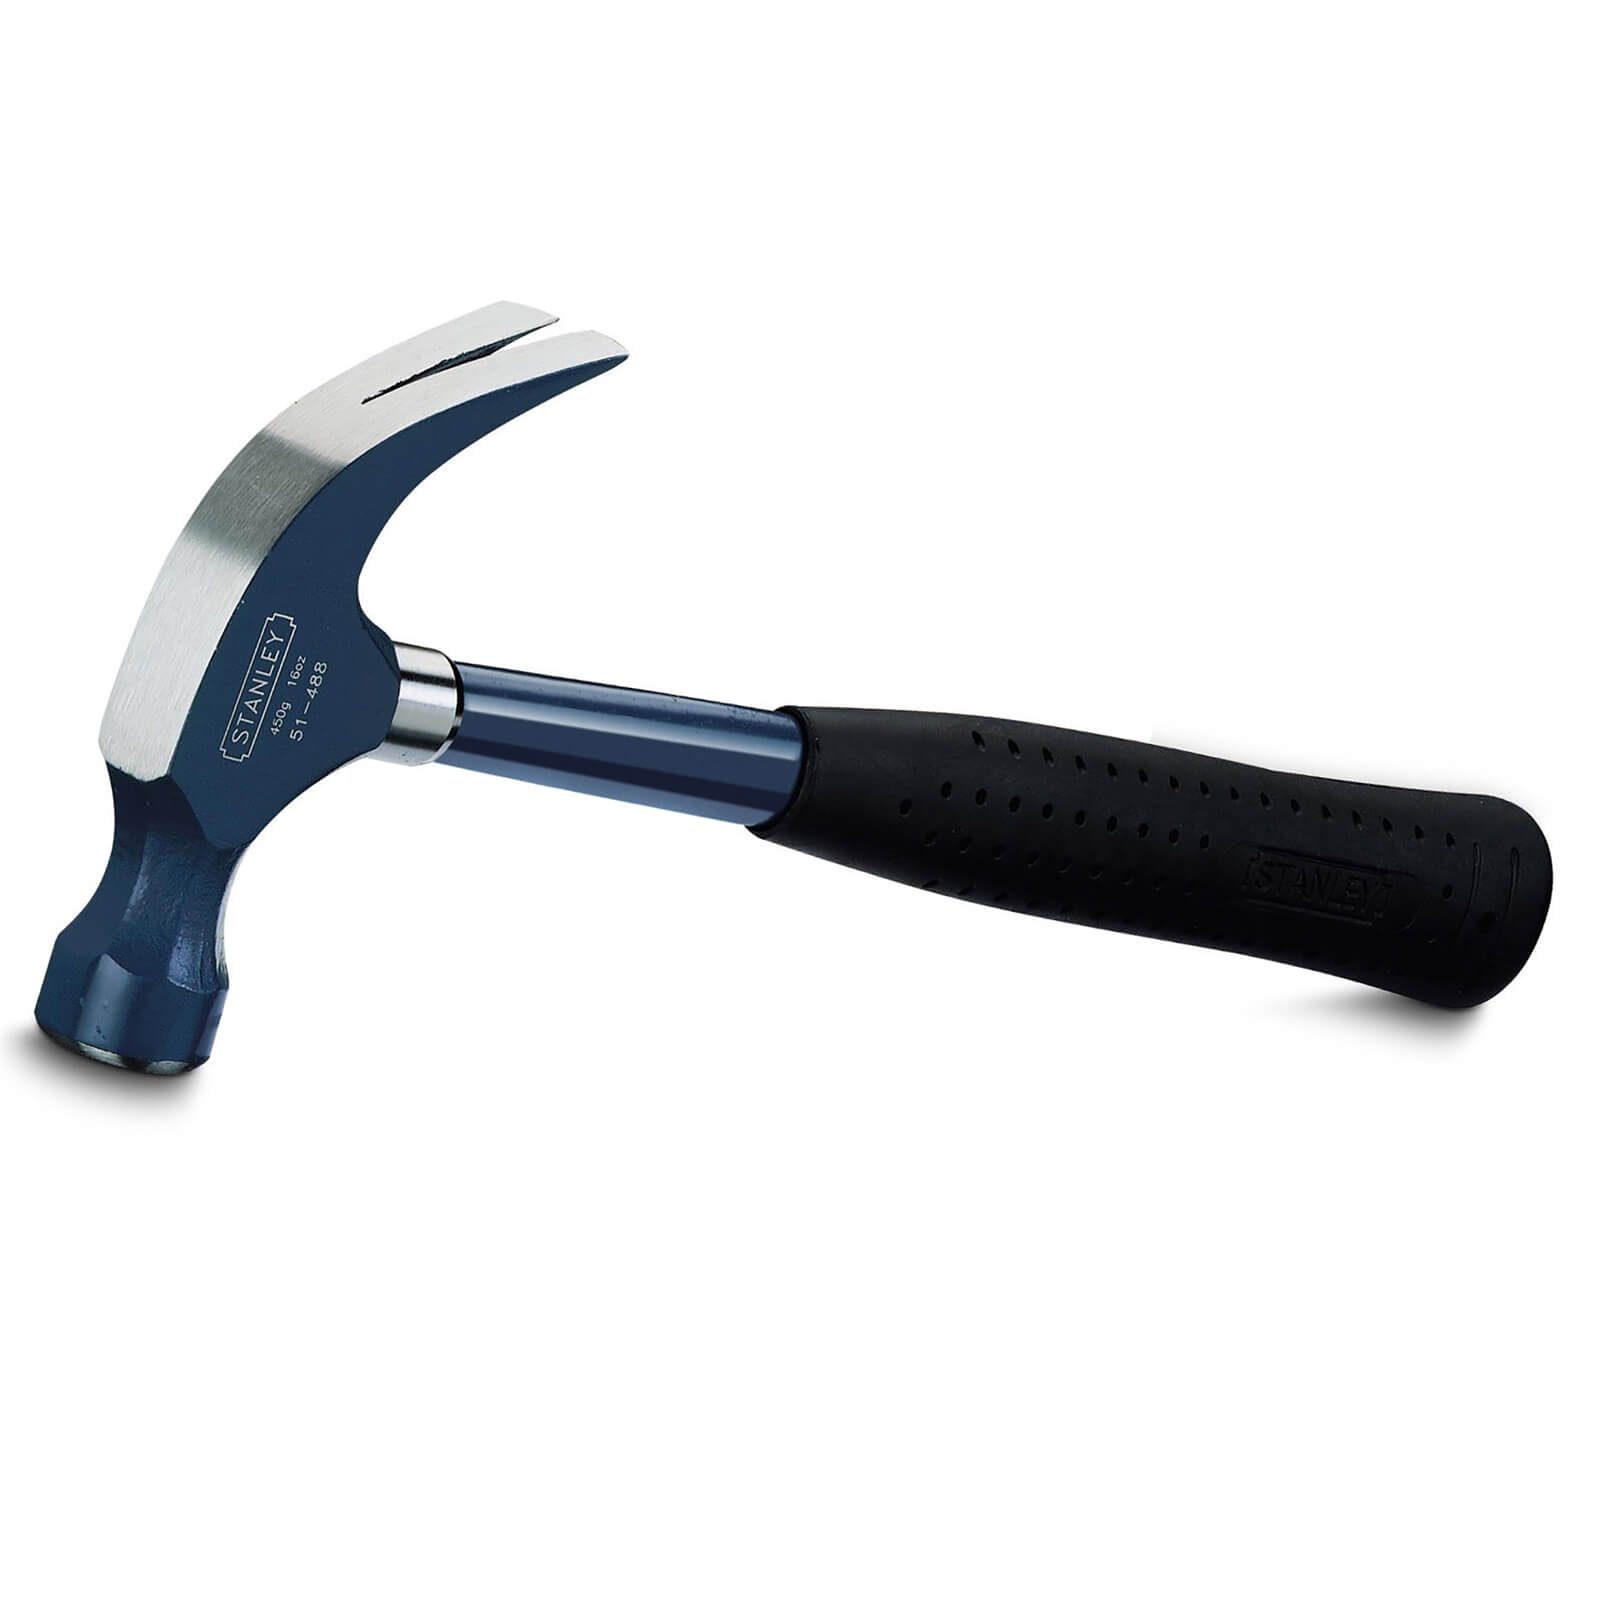 Stanley 16oz/450g Blue Strike Claw Hammer